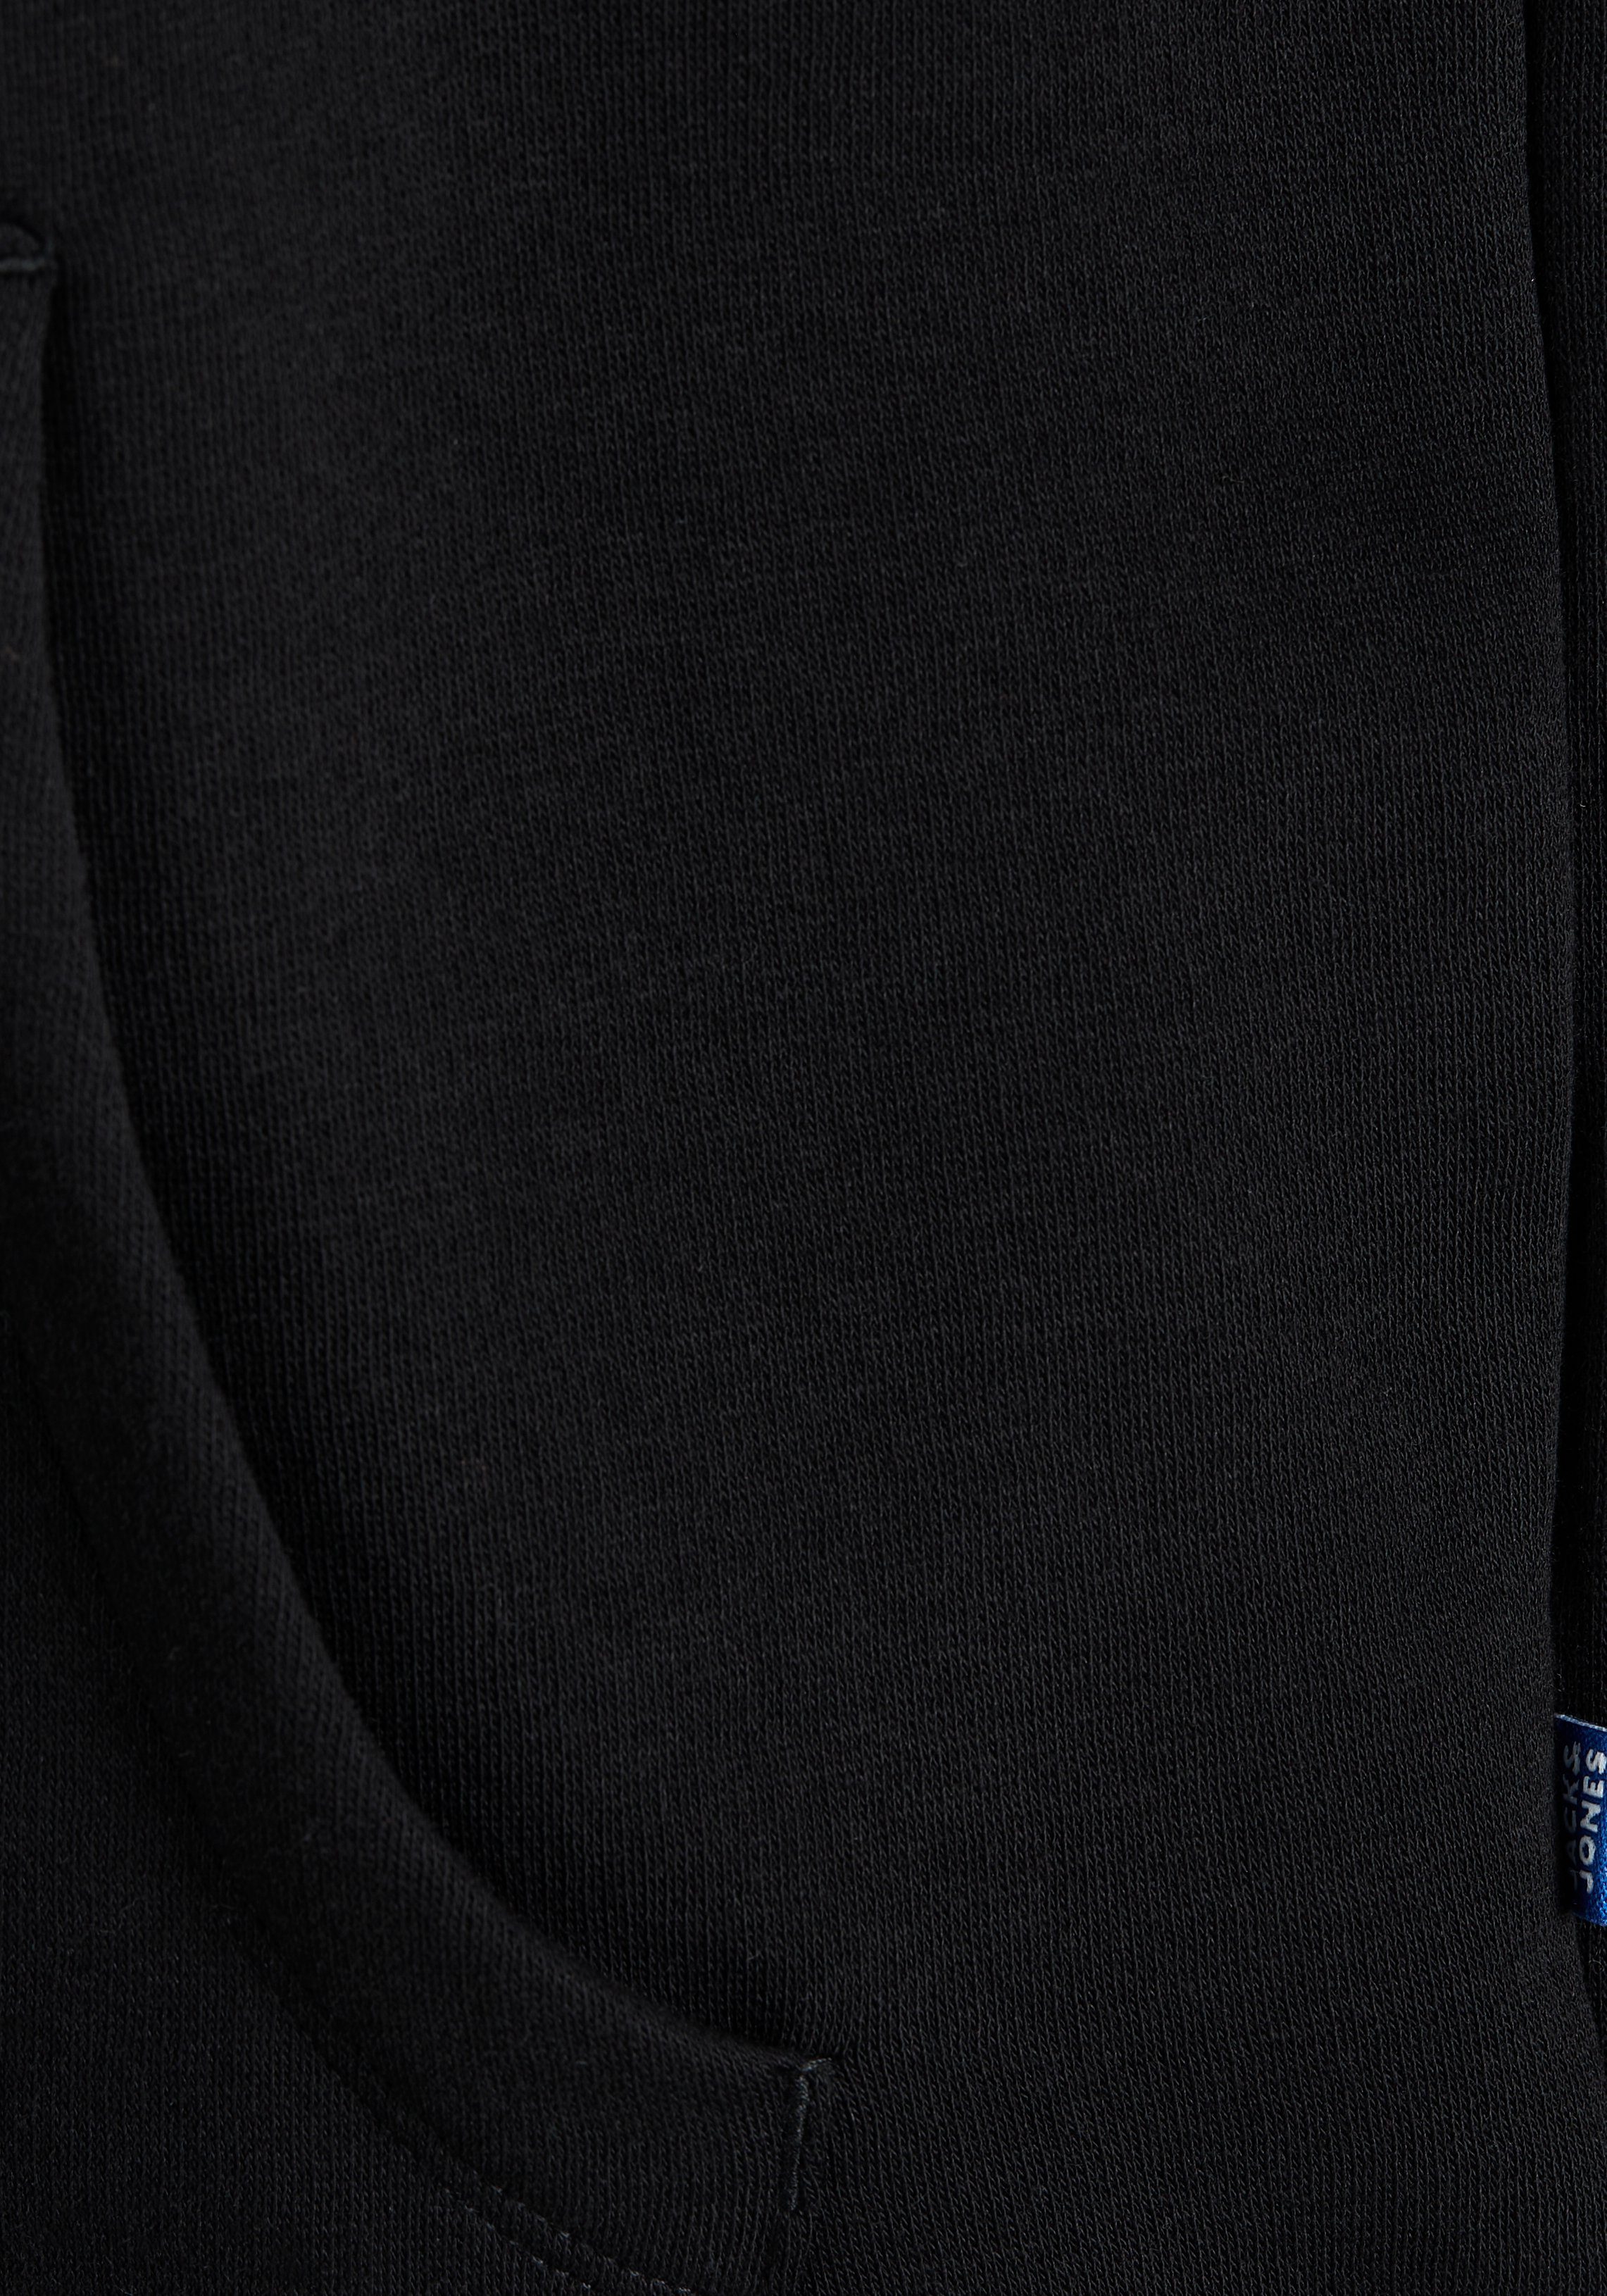 Jack & Jones Junior HOOD Kapuzensweatshirt JJECORP black/Large SWEAT LOGO Print